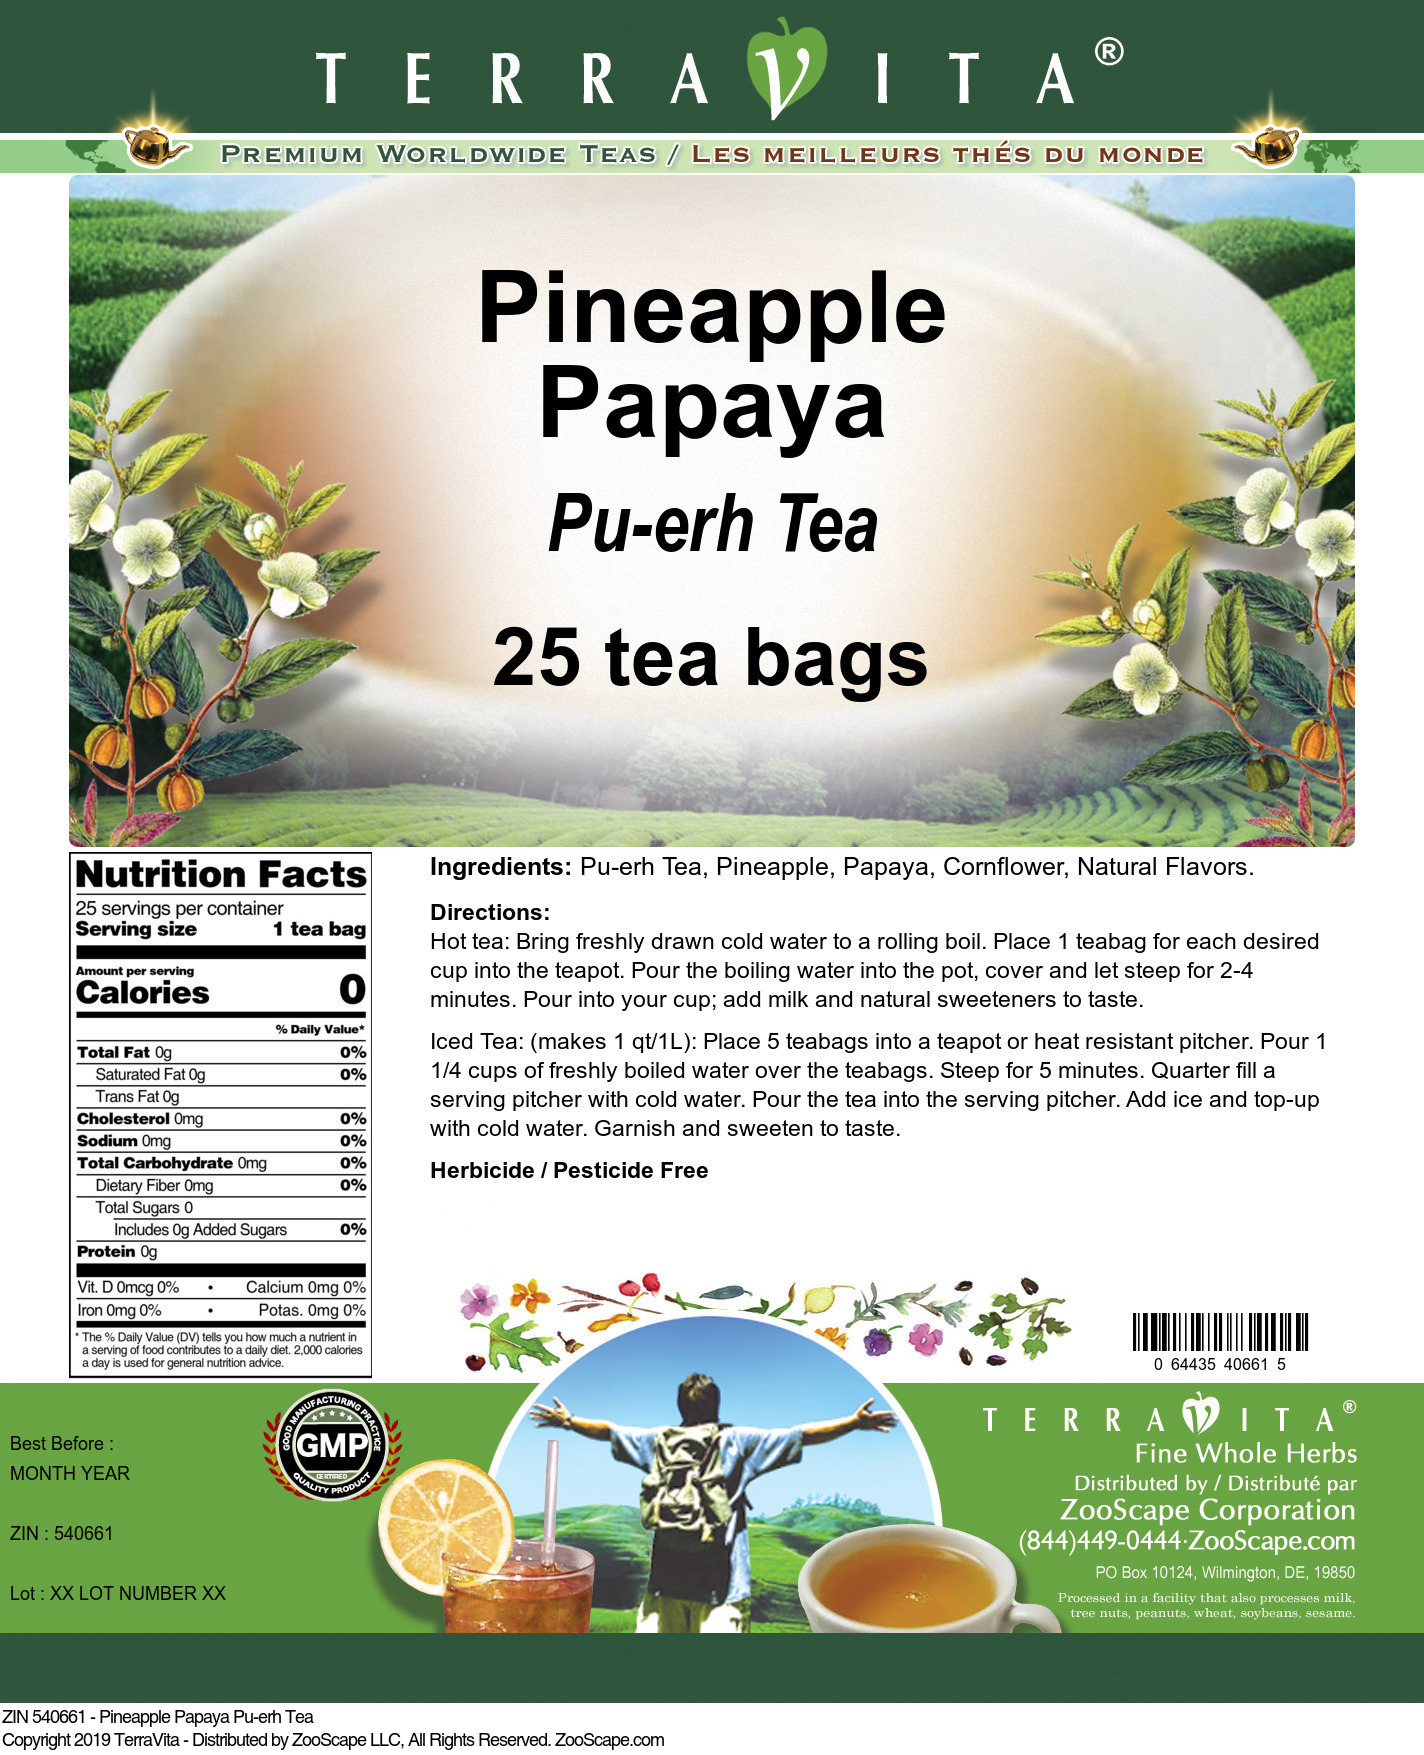 Pineapple Papaya Pu-erh Tea - Label